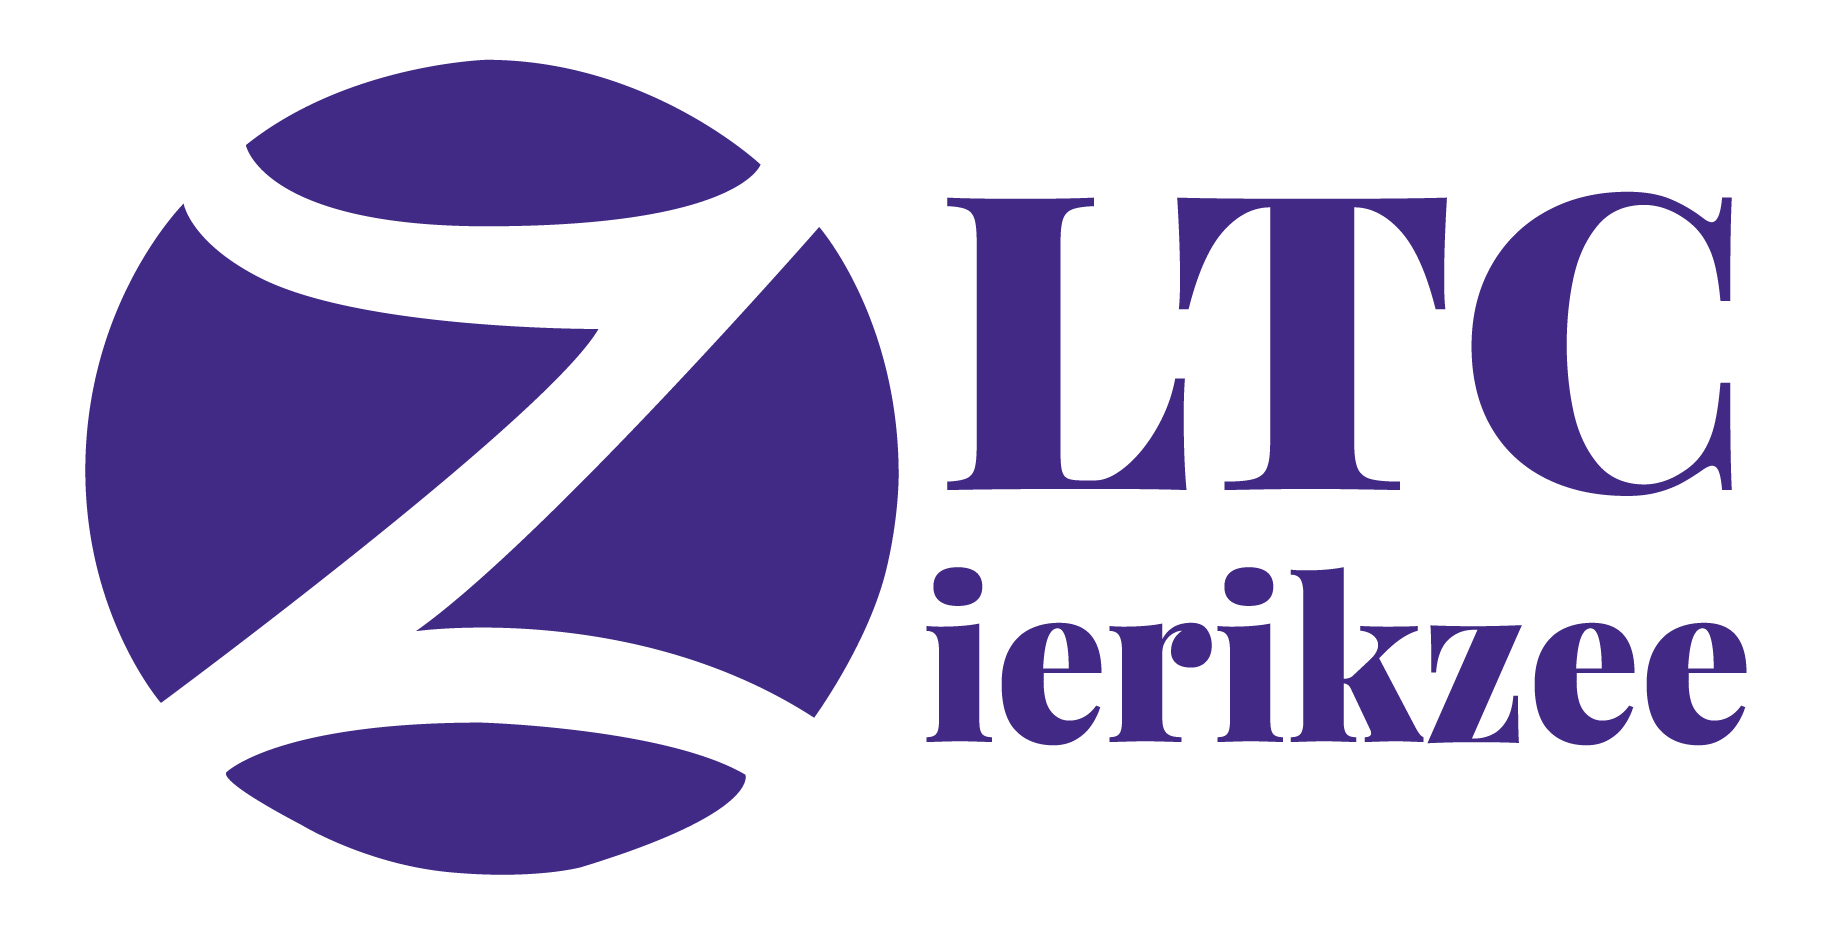 Profile image of venue L.T.C Zierikzee